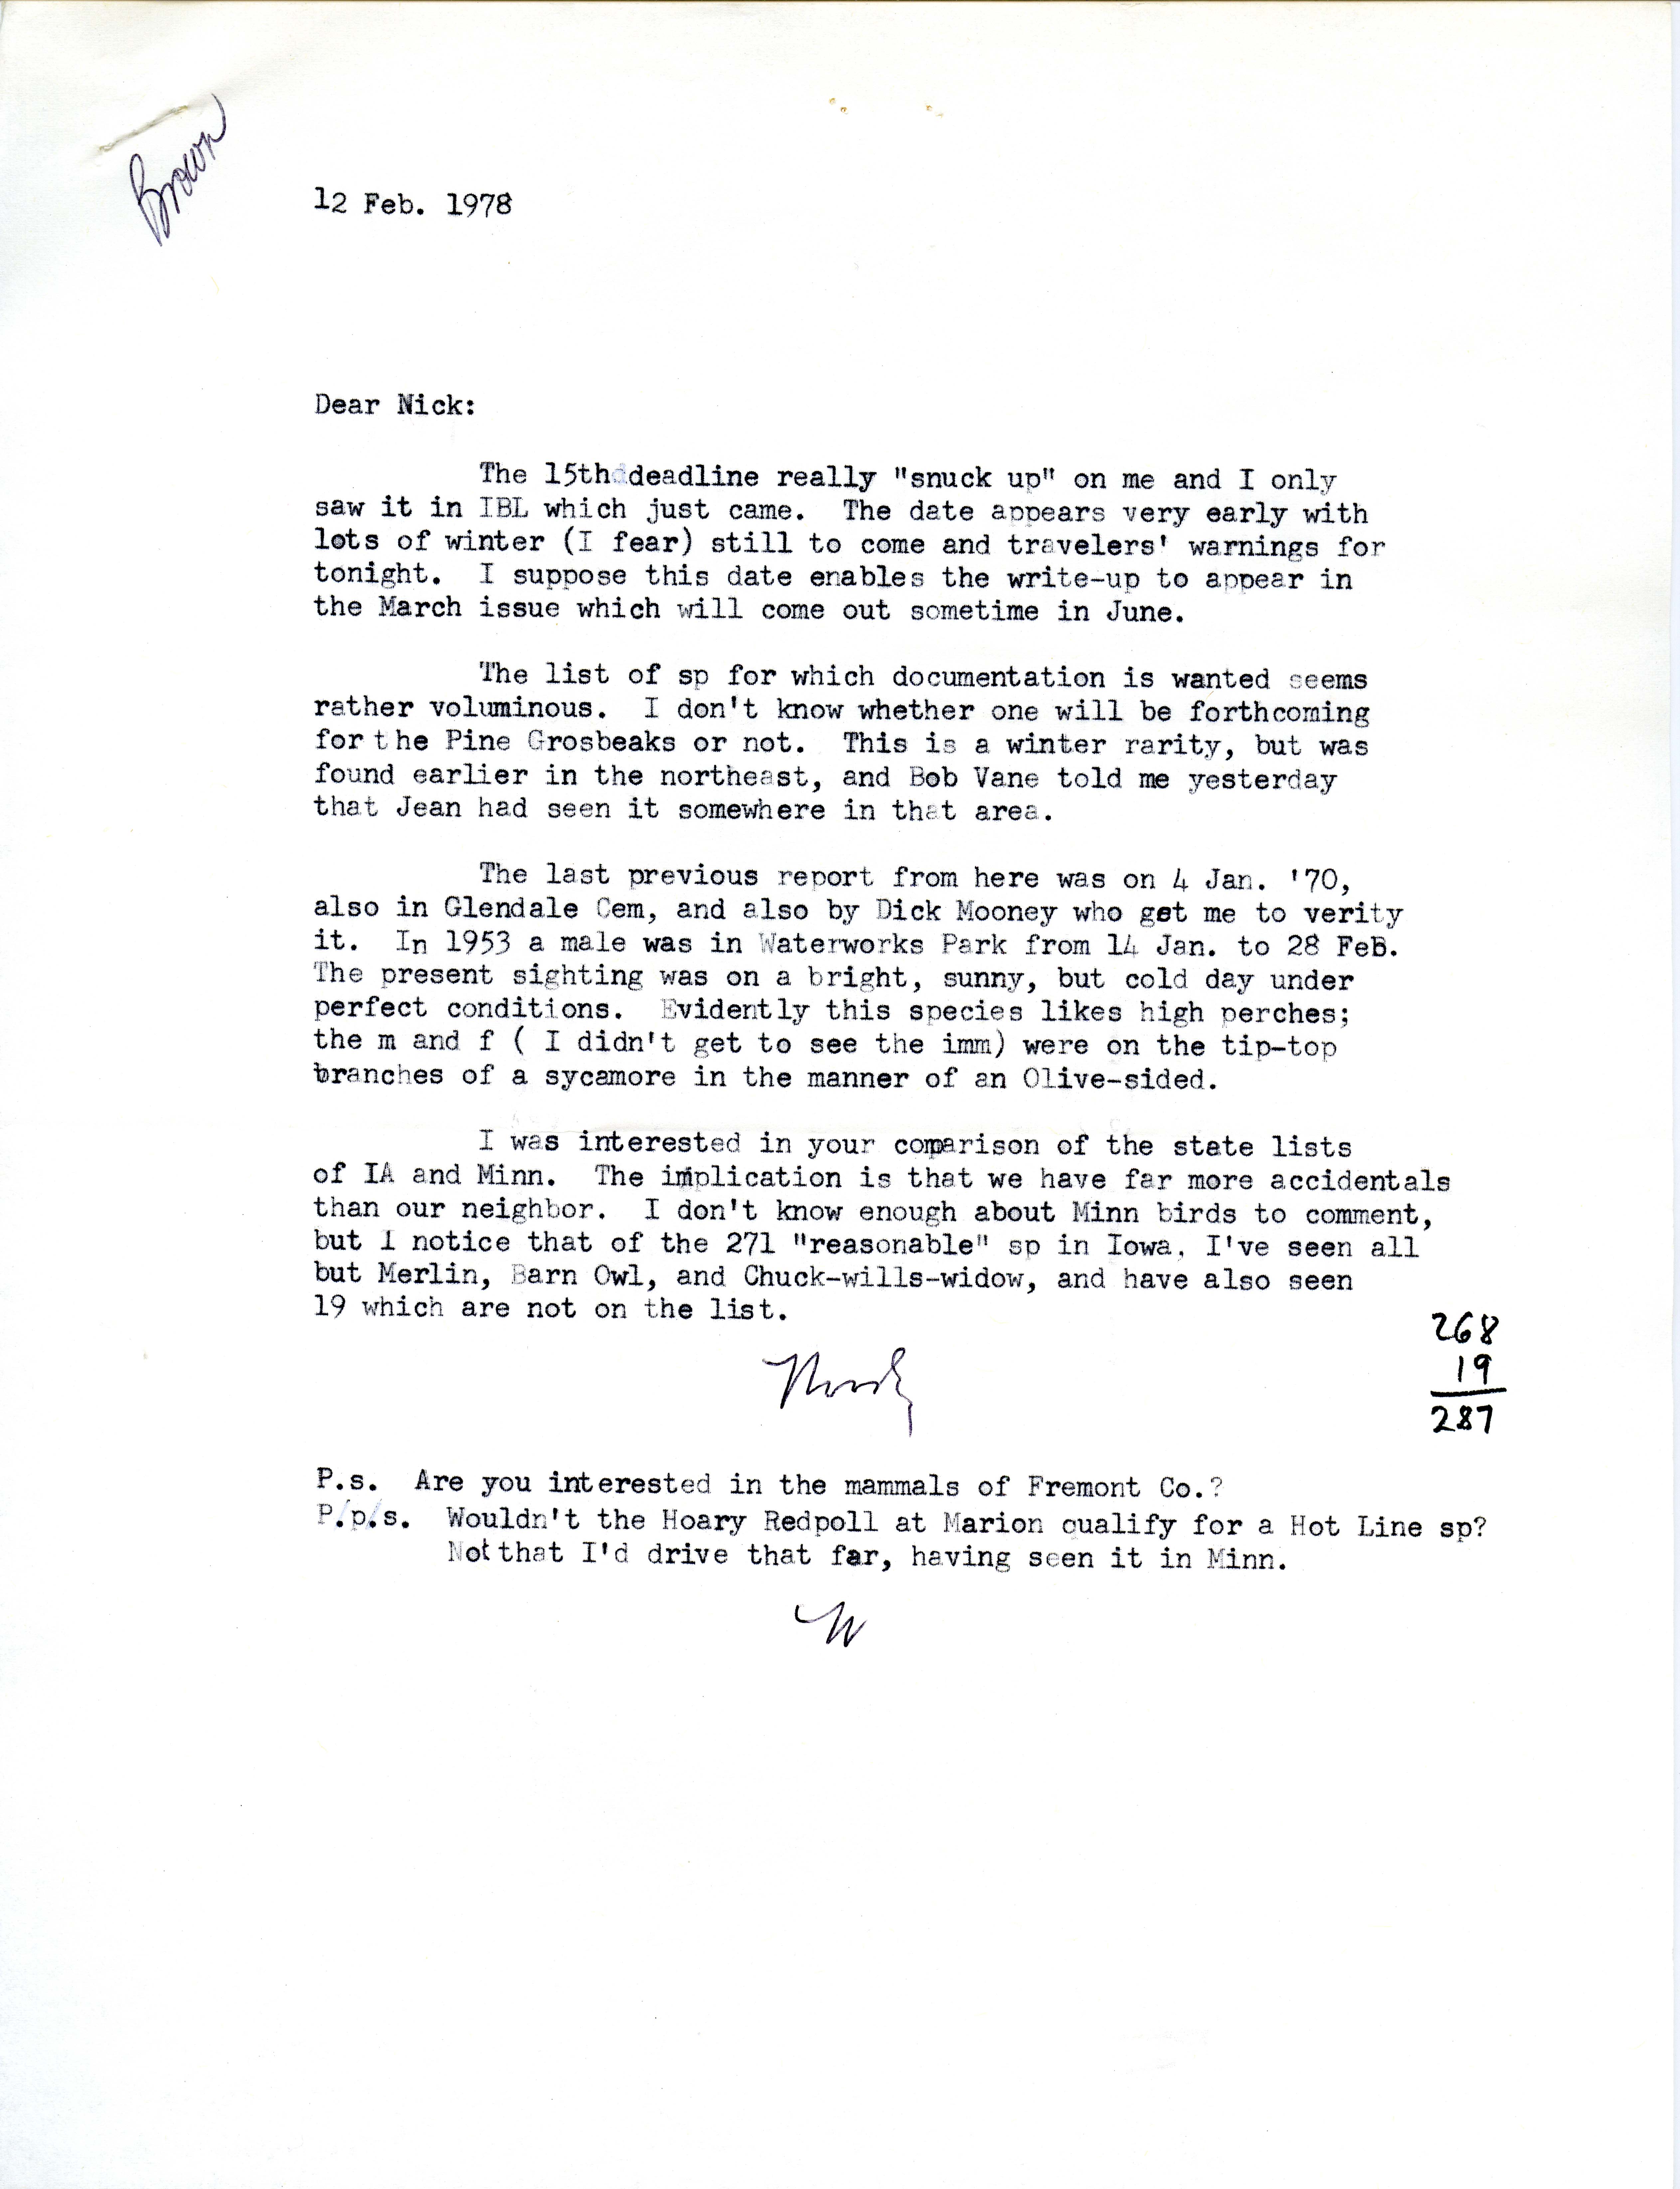  Woodward H. Brown letter to Nicholas S. Halmi regarding bird sightings, February 12, 1978